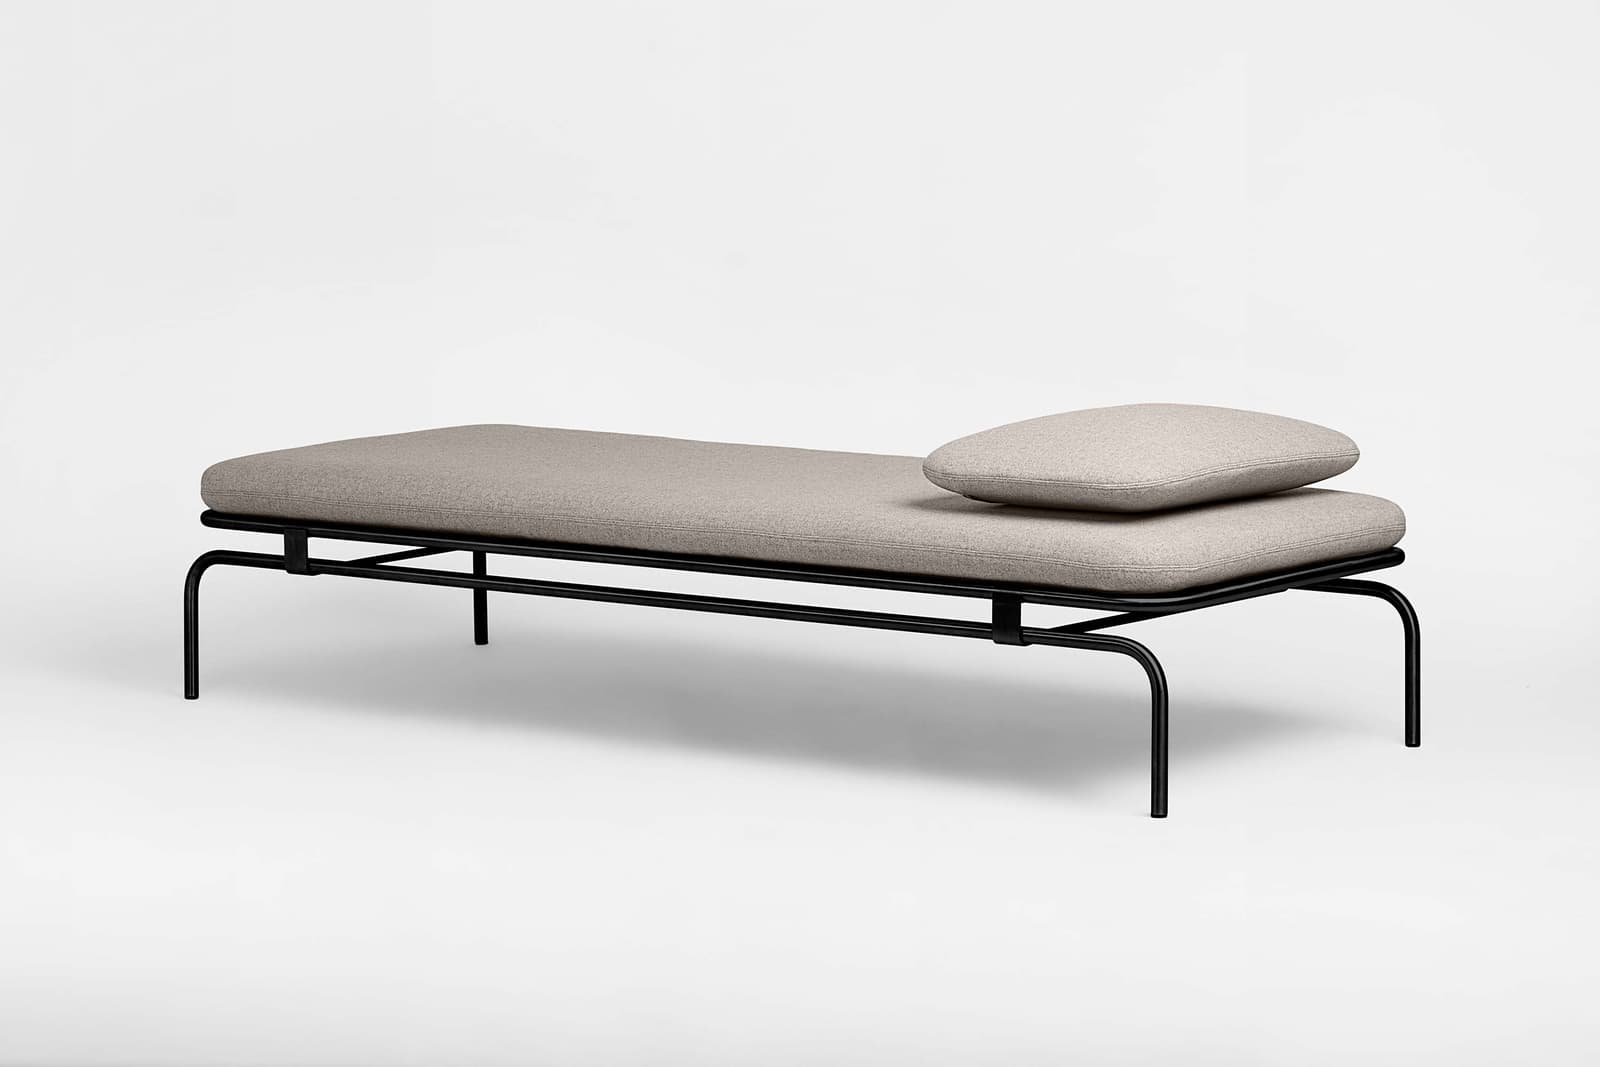 New Works by Copenhagen-Based Furniture Brand COMMON